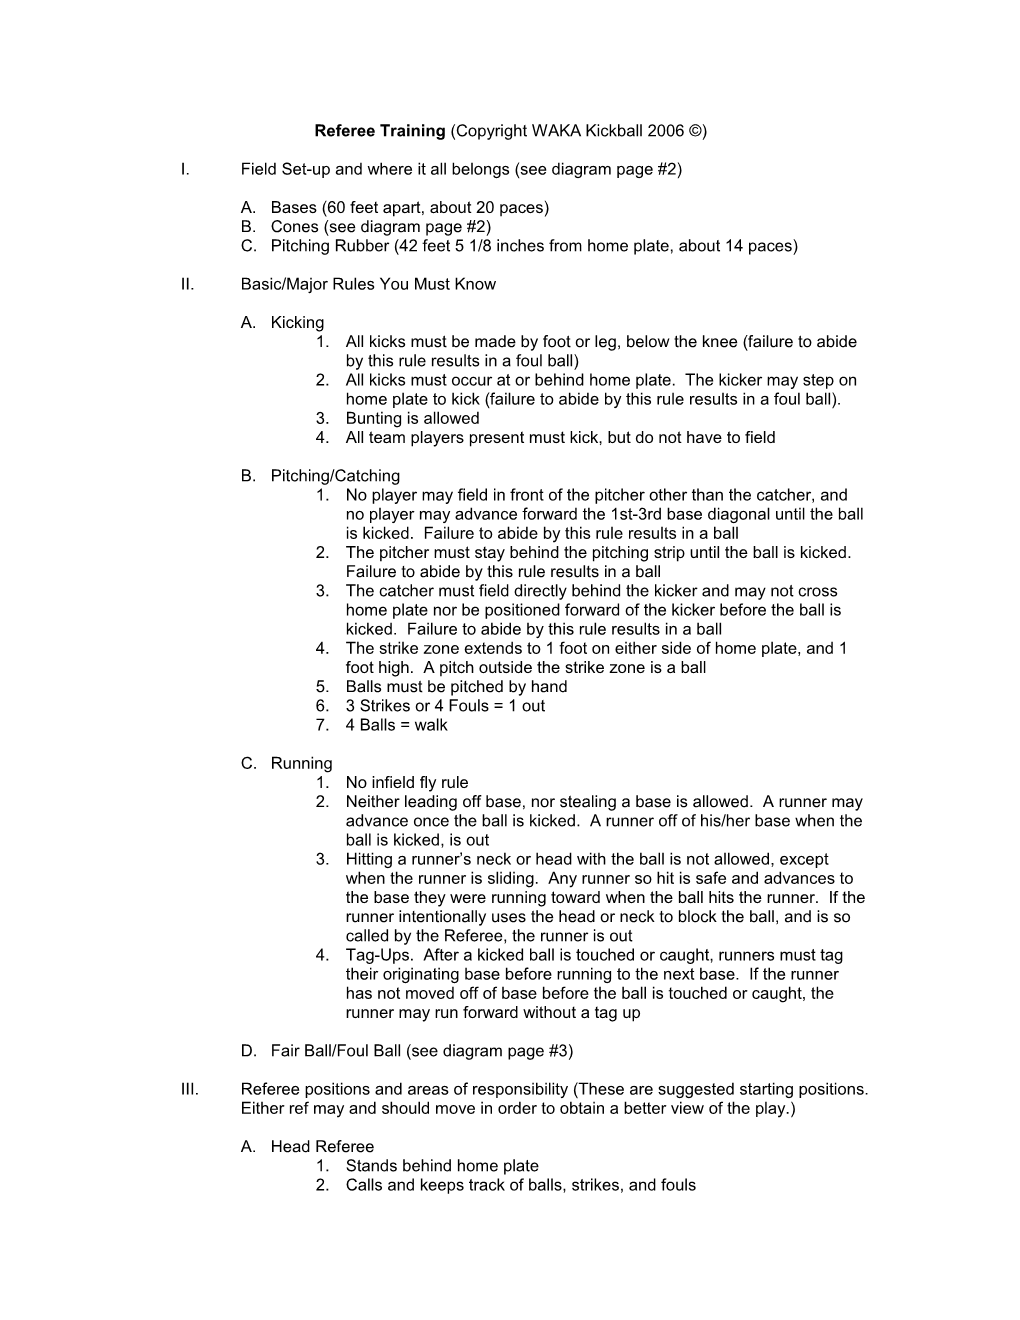 Referee Training Agenda (Copyright )